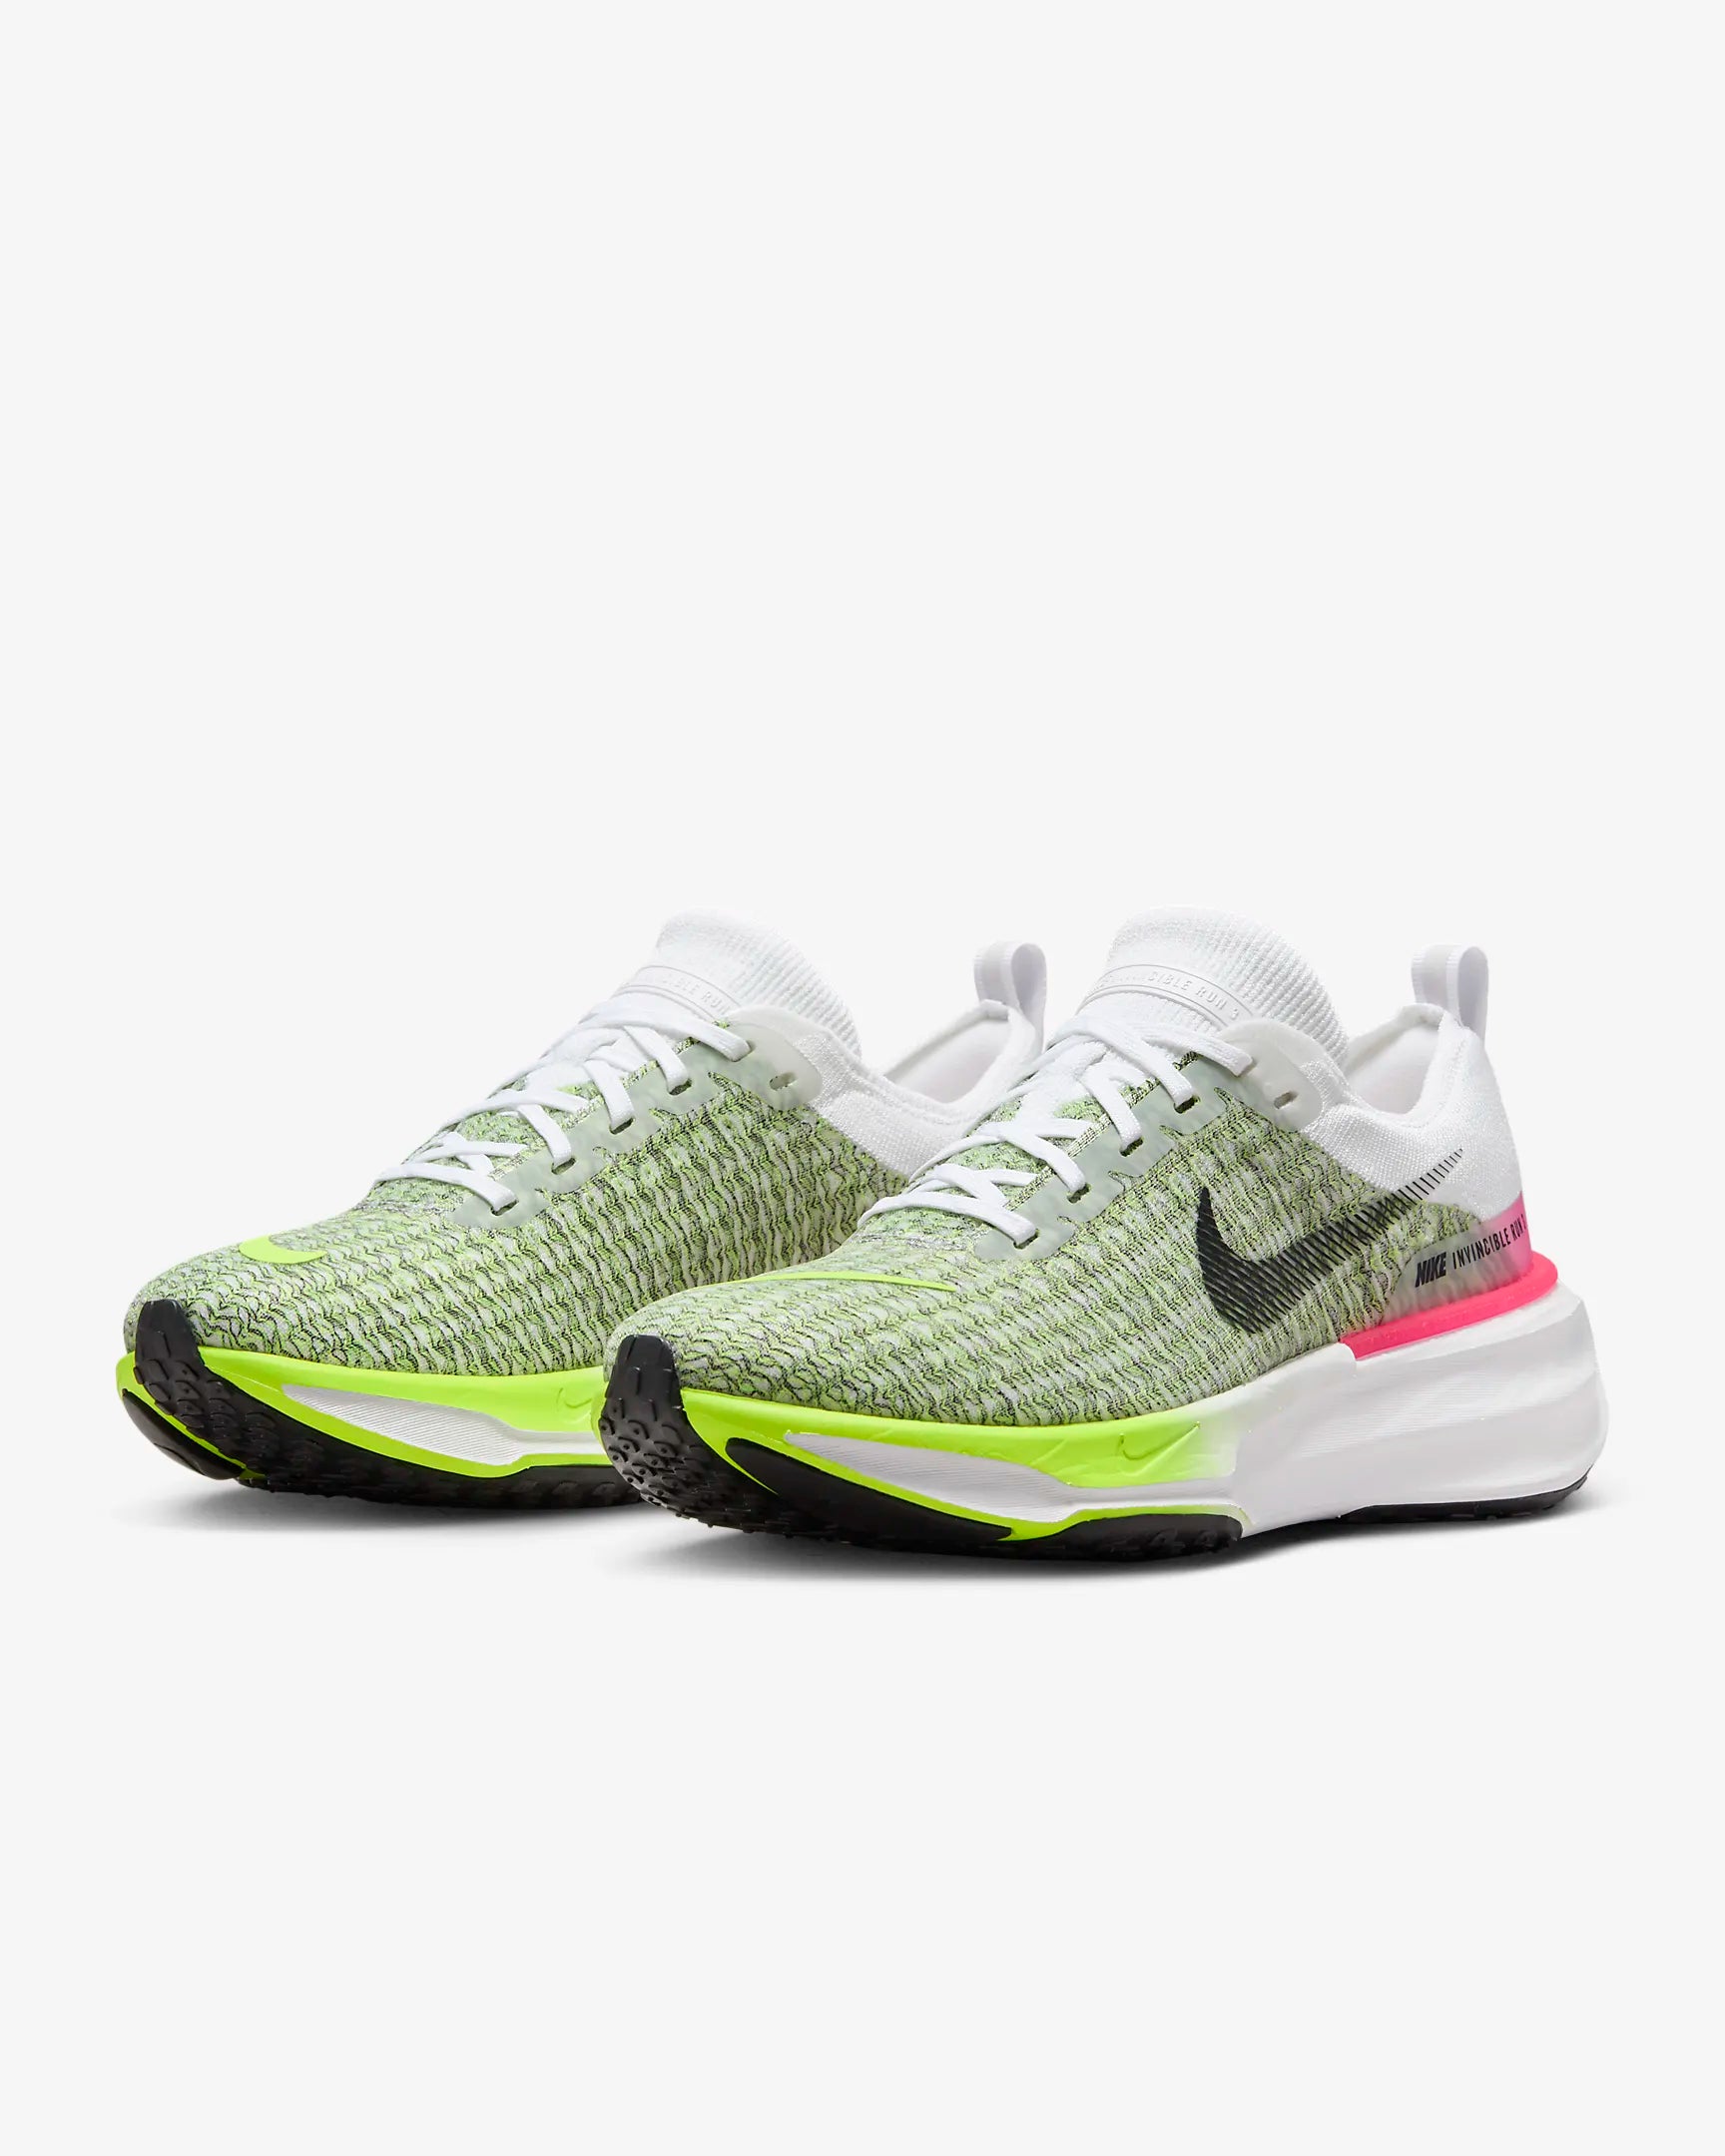 Nike Invincible 3 Men's Road Running Shoes-Green